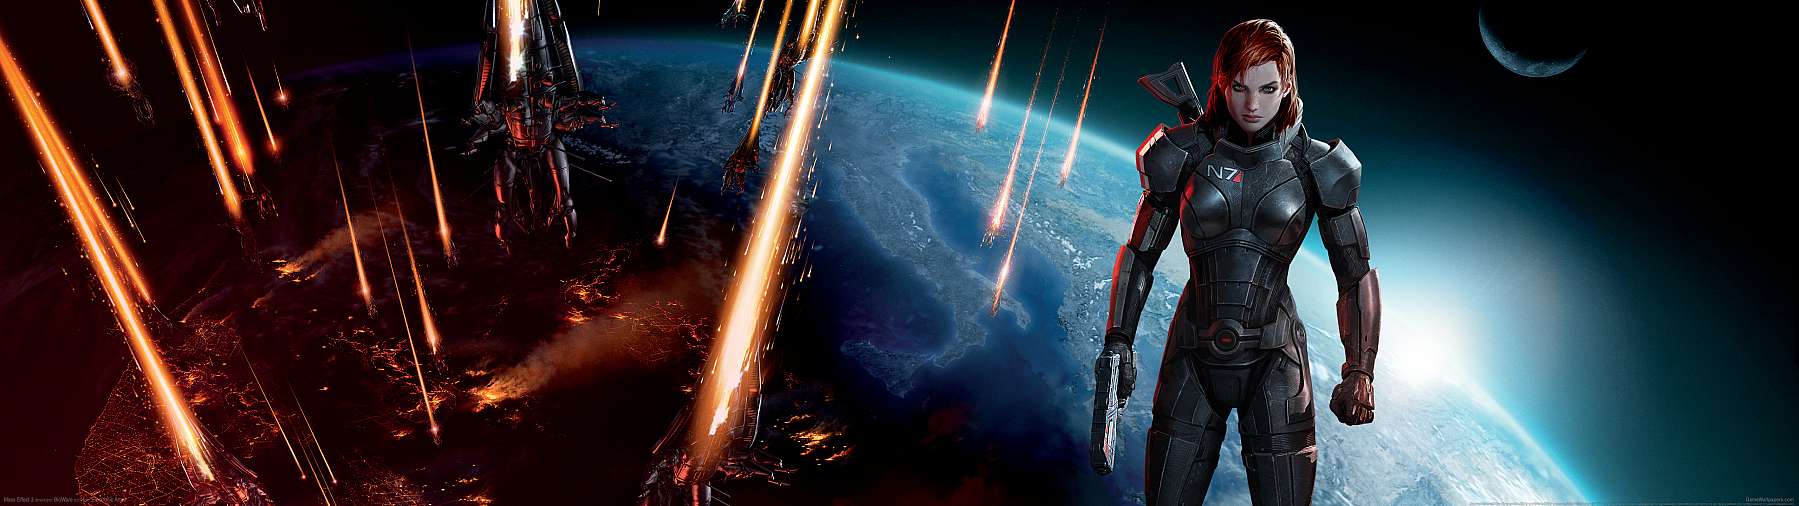 Mass Effect 3 superwide achtergrond 11